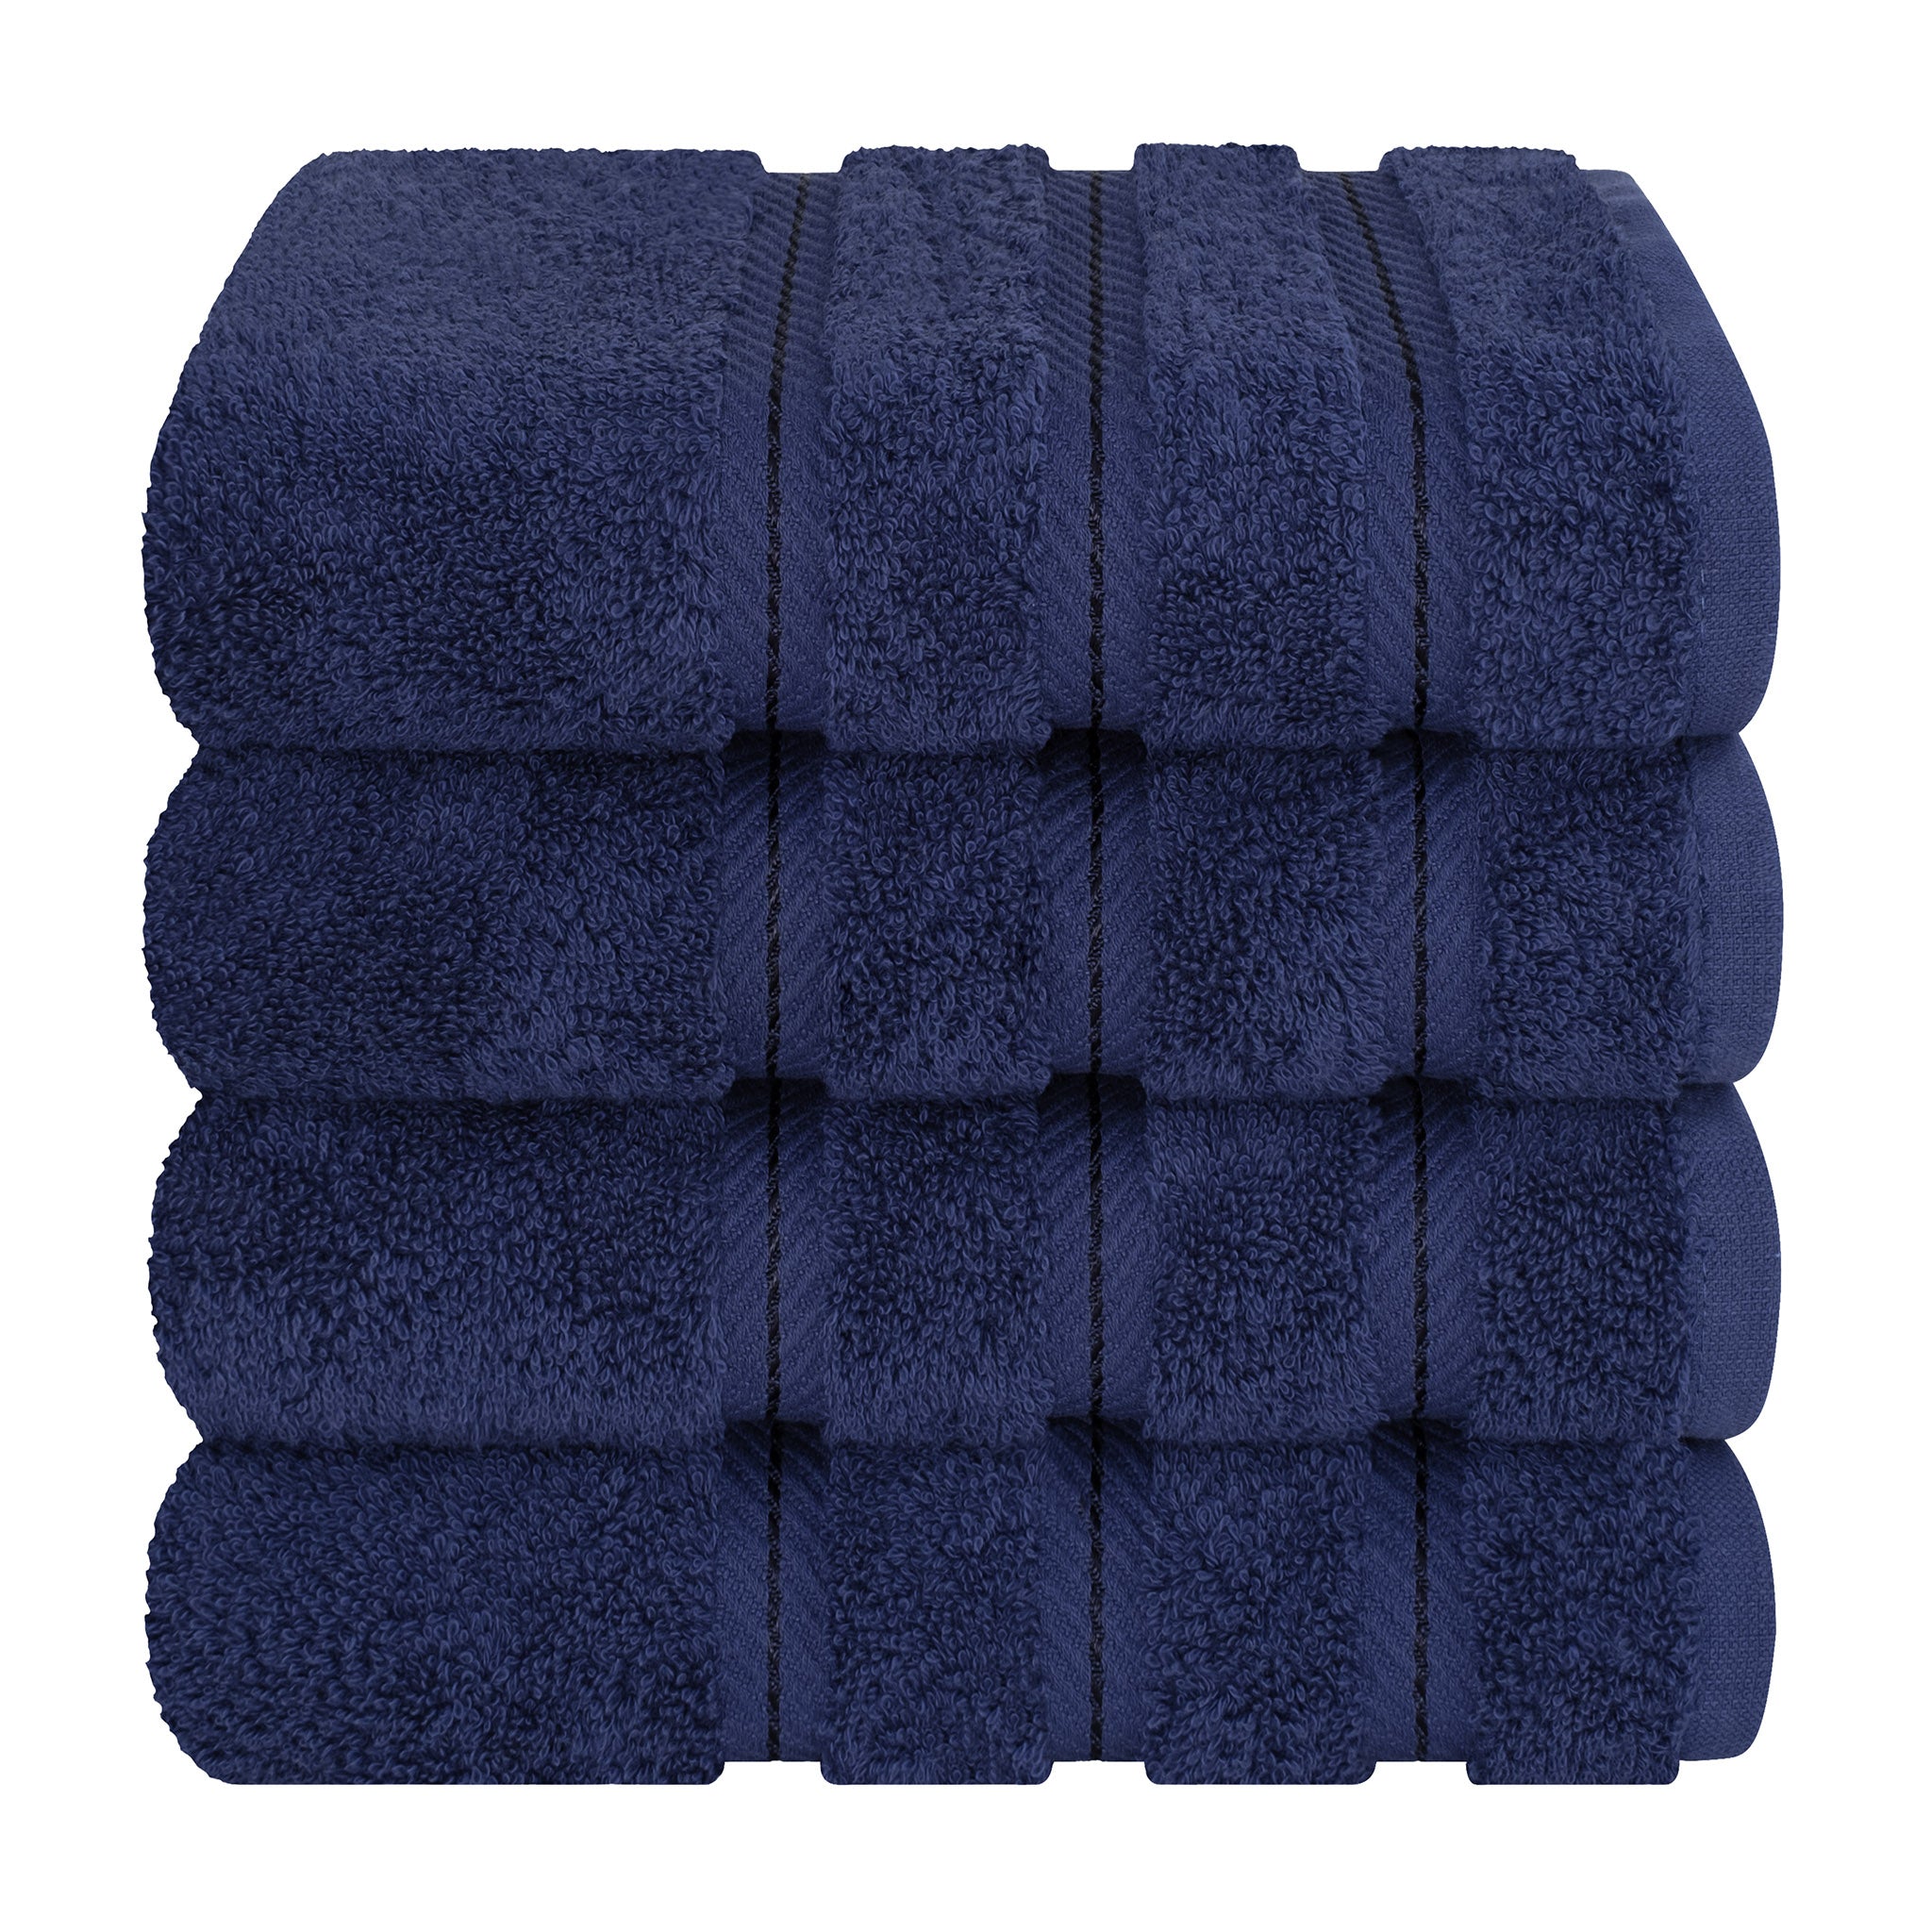  American Soft Linen 100% Turkish Cotton 4 Pack Hand Towel Set  navy-blue-7